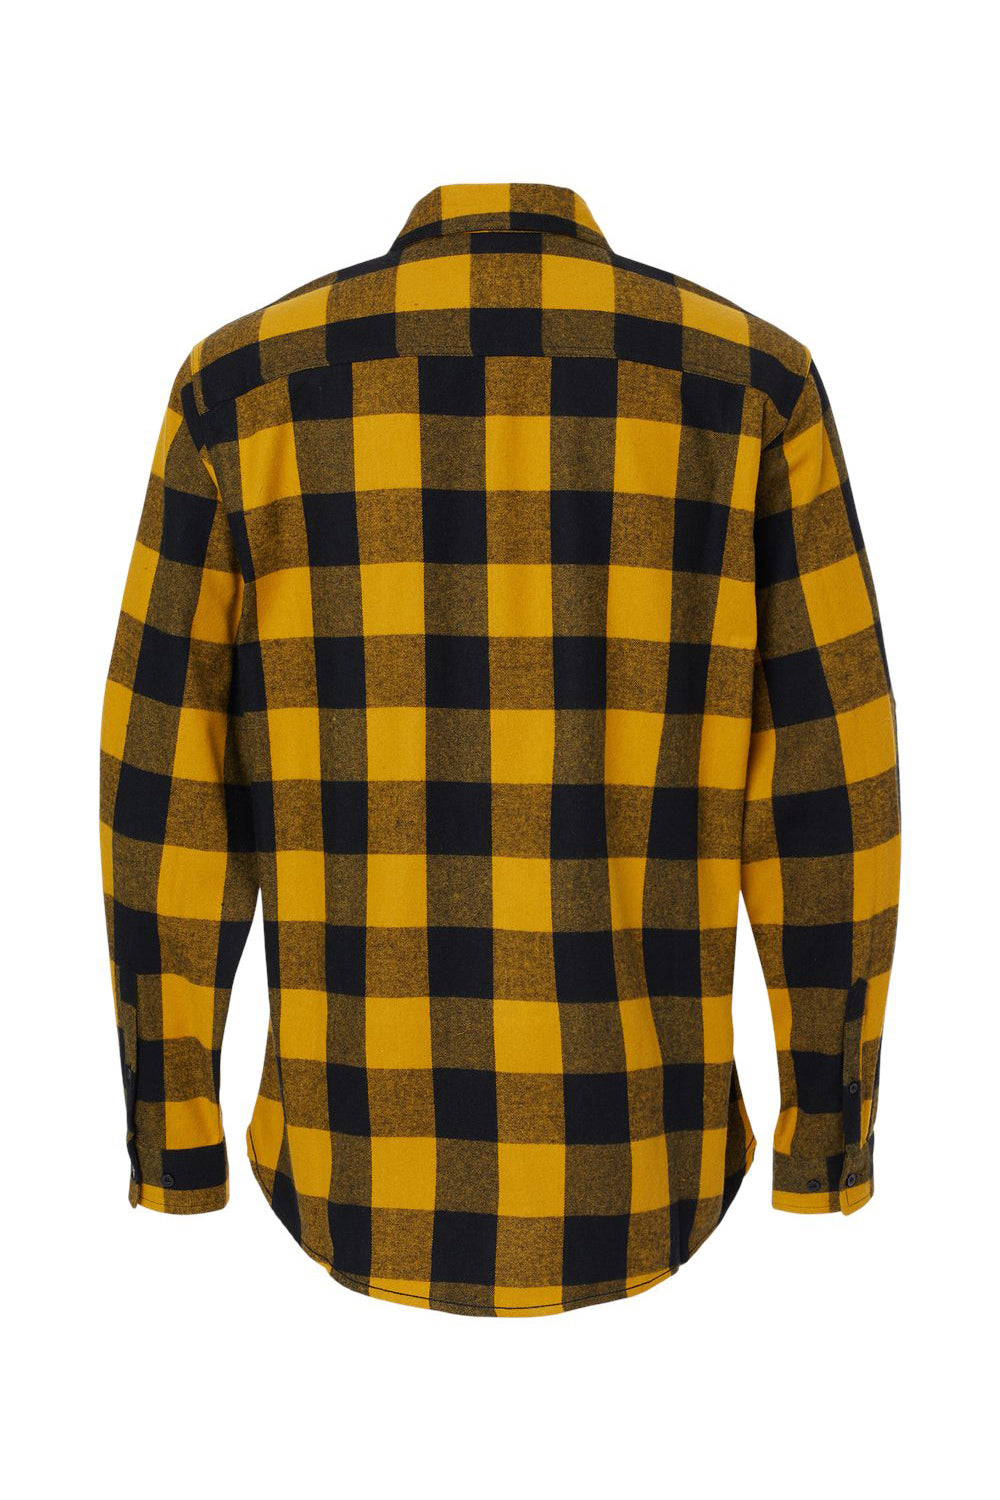 Burnside B8210/8210 Mens Flannel Long Sleeve Button Down Shirt w/ Double Pockets Gold/Black Flat Back